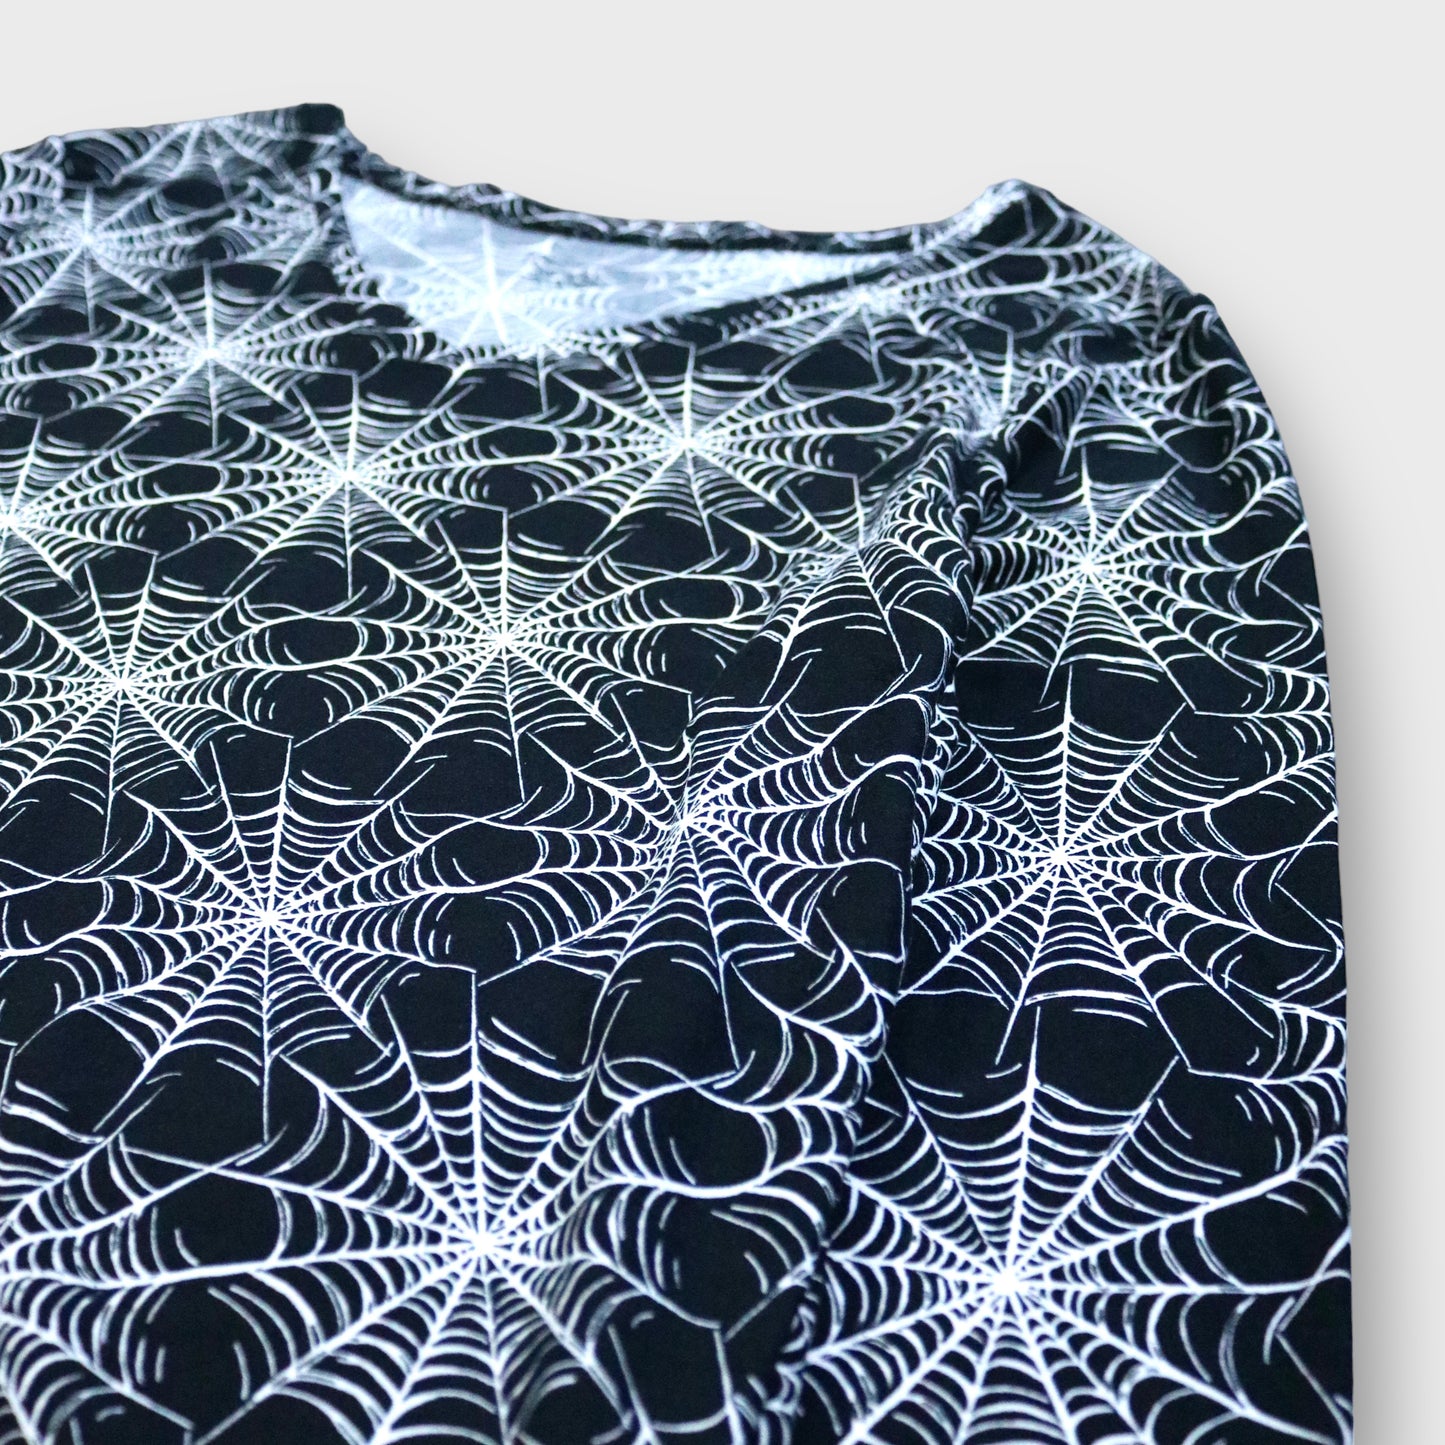 Spider web pattern l/s t-shirt